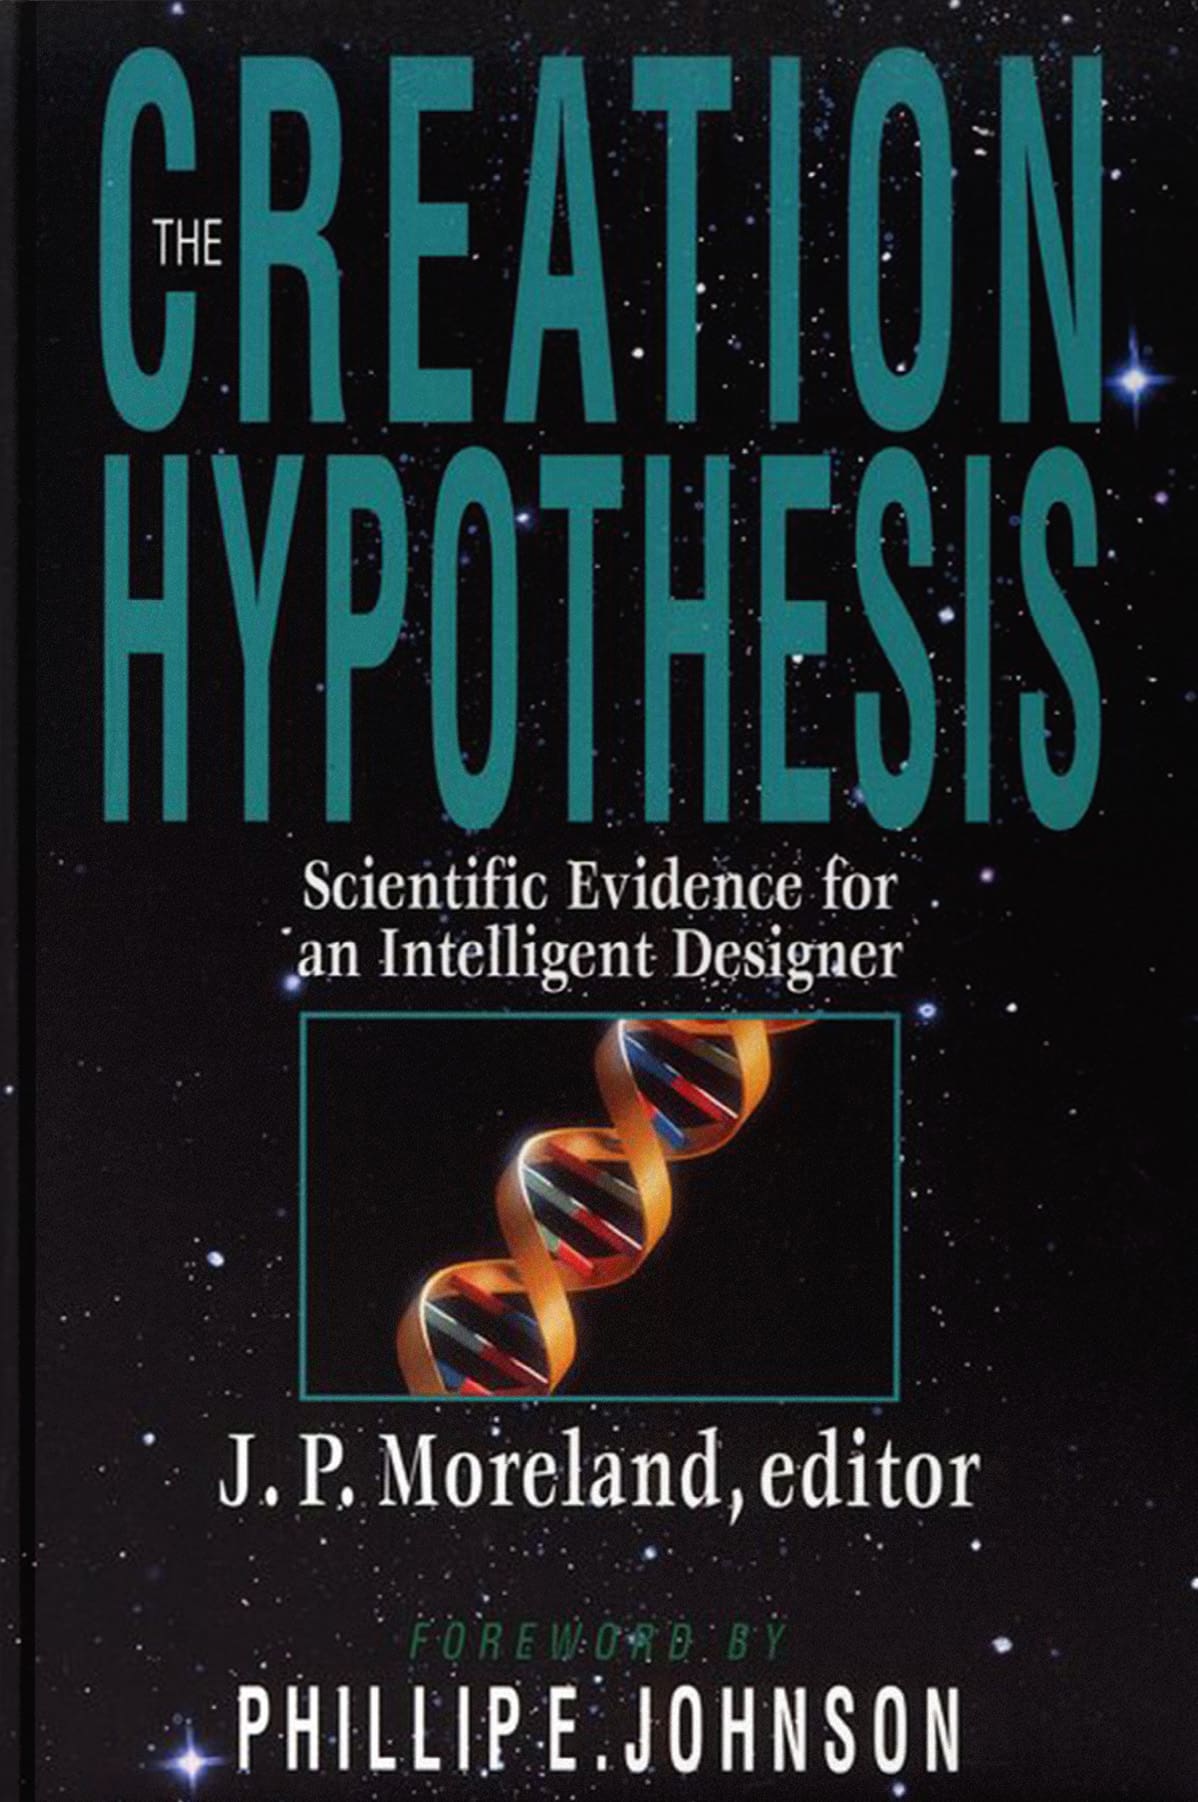 creation-hypothesis